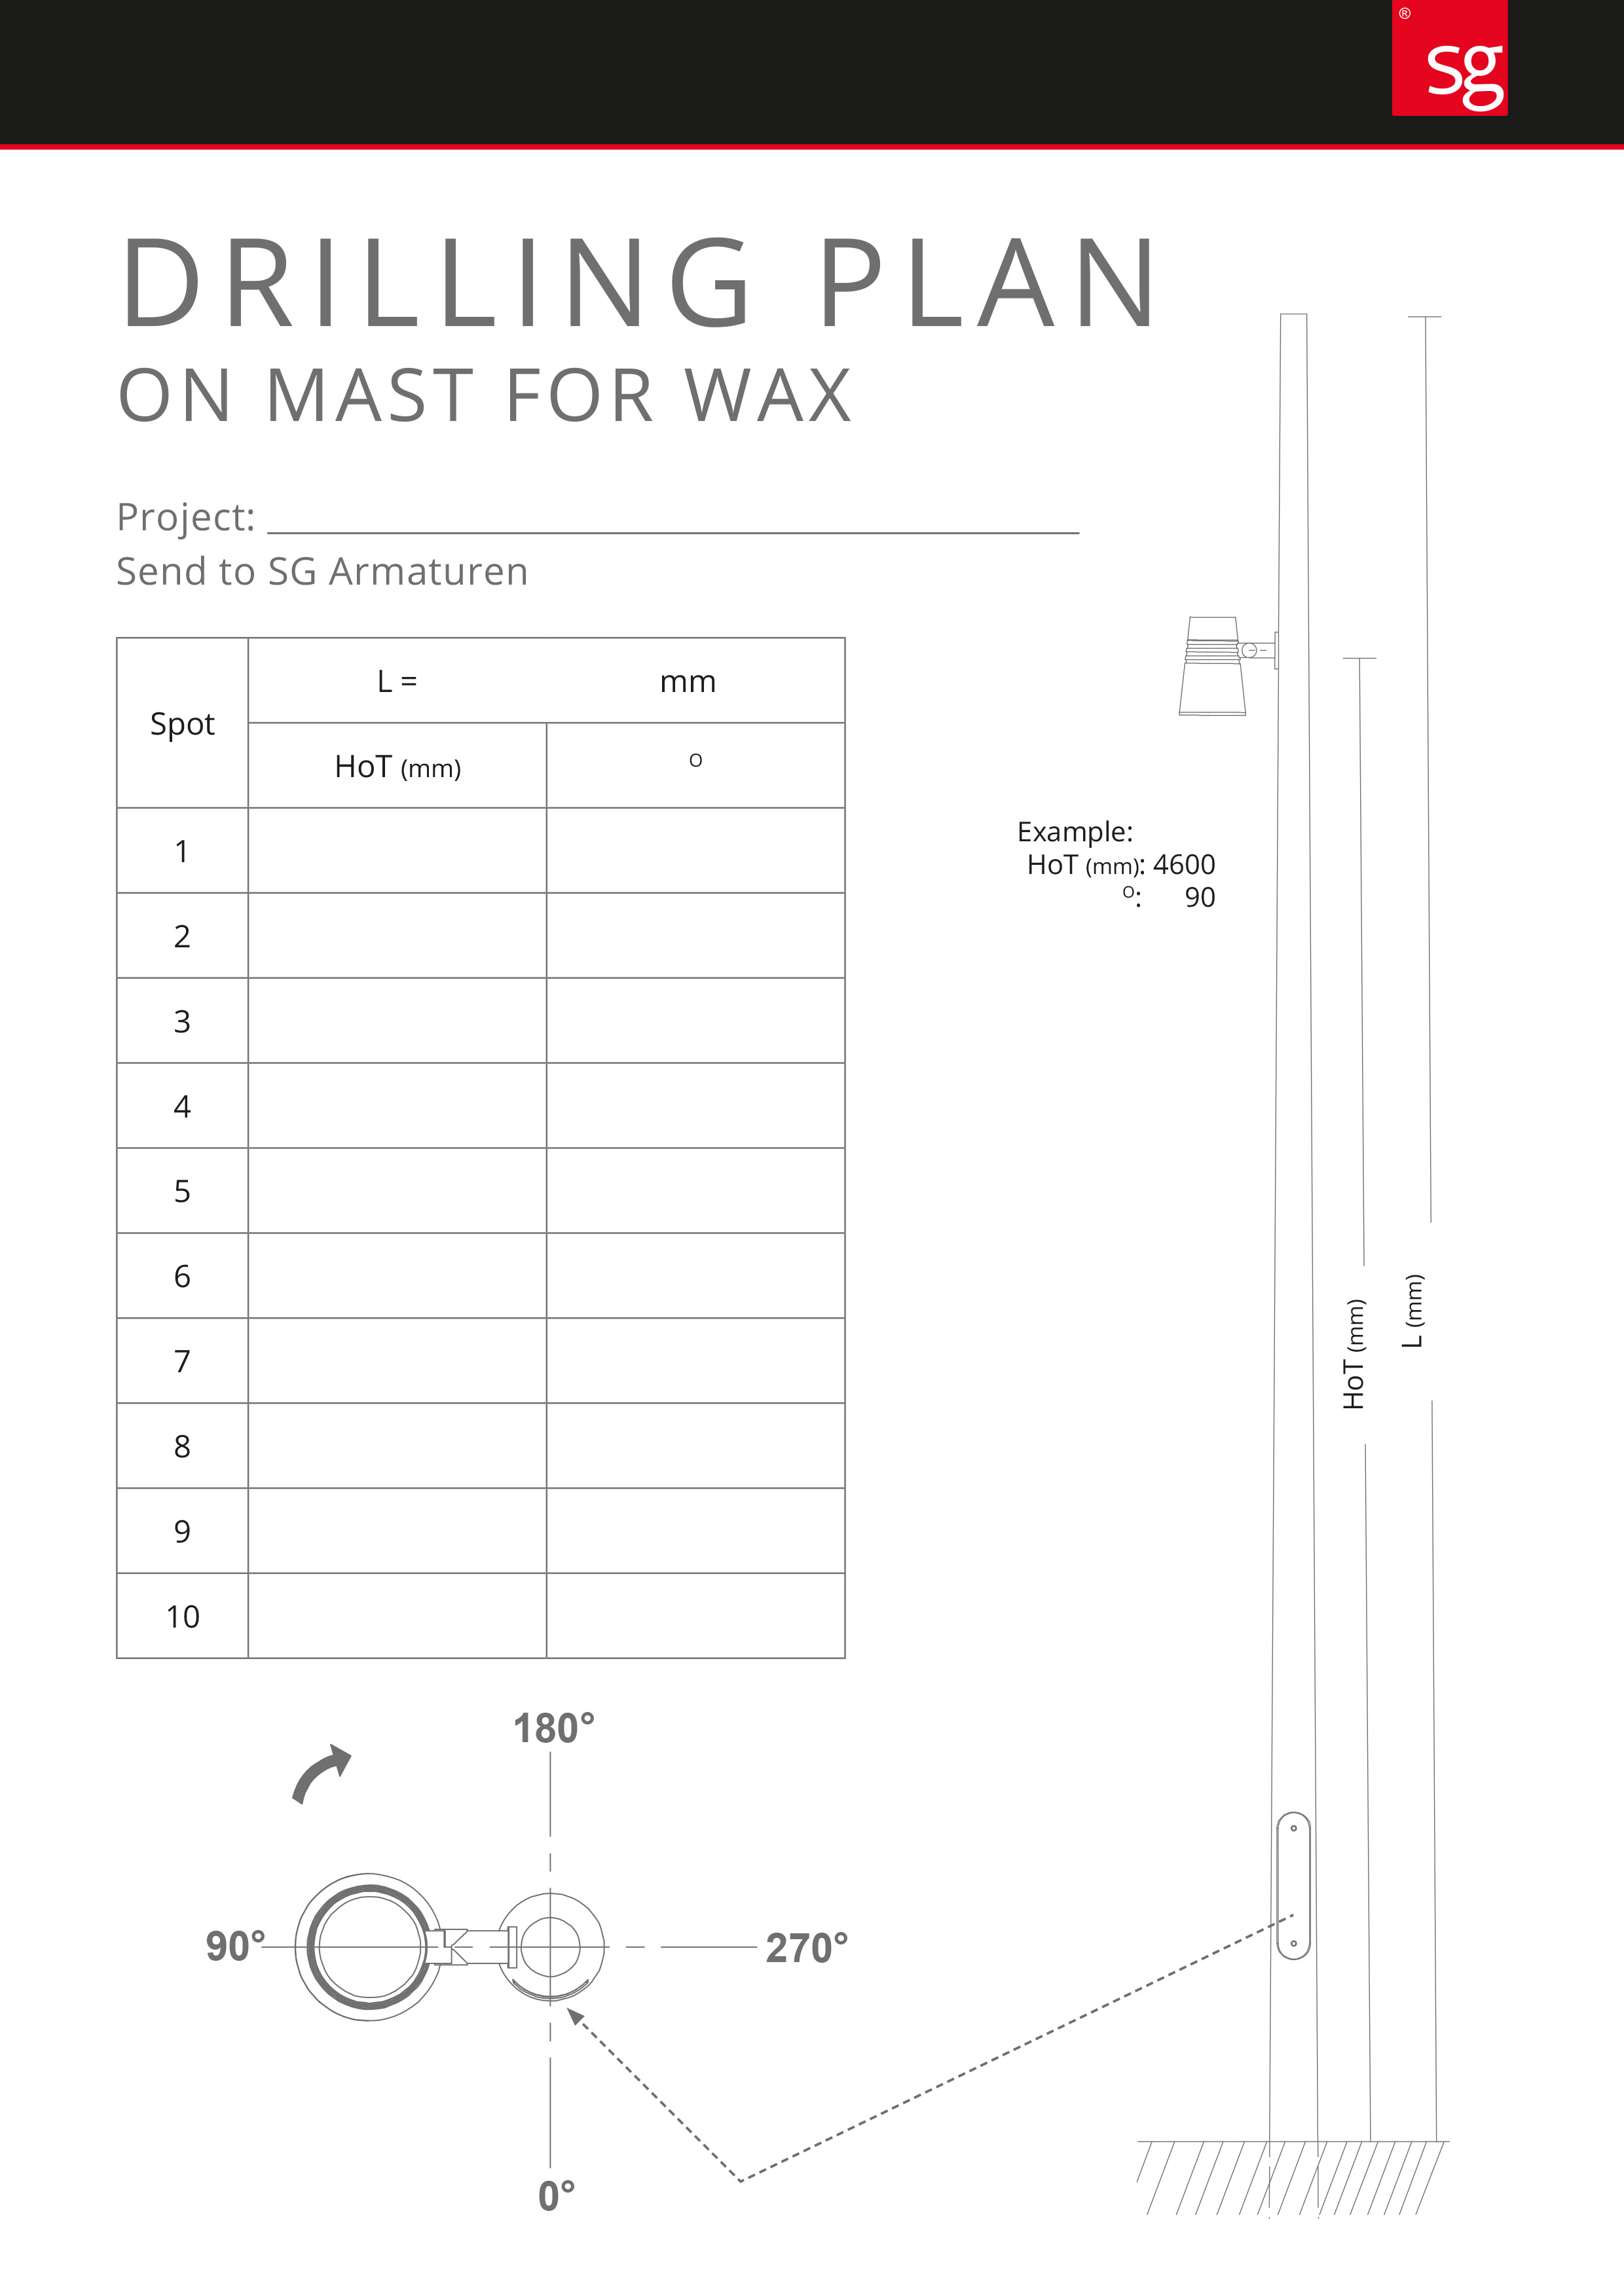 Wax Black Design pole 8m Steel